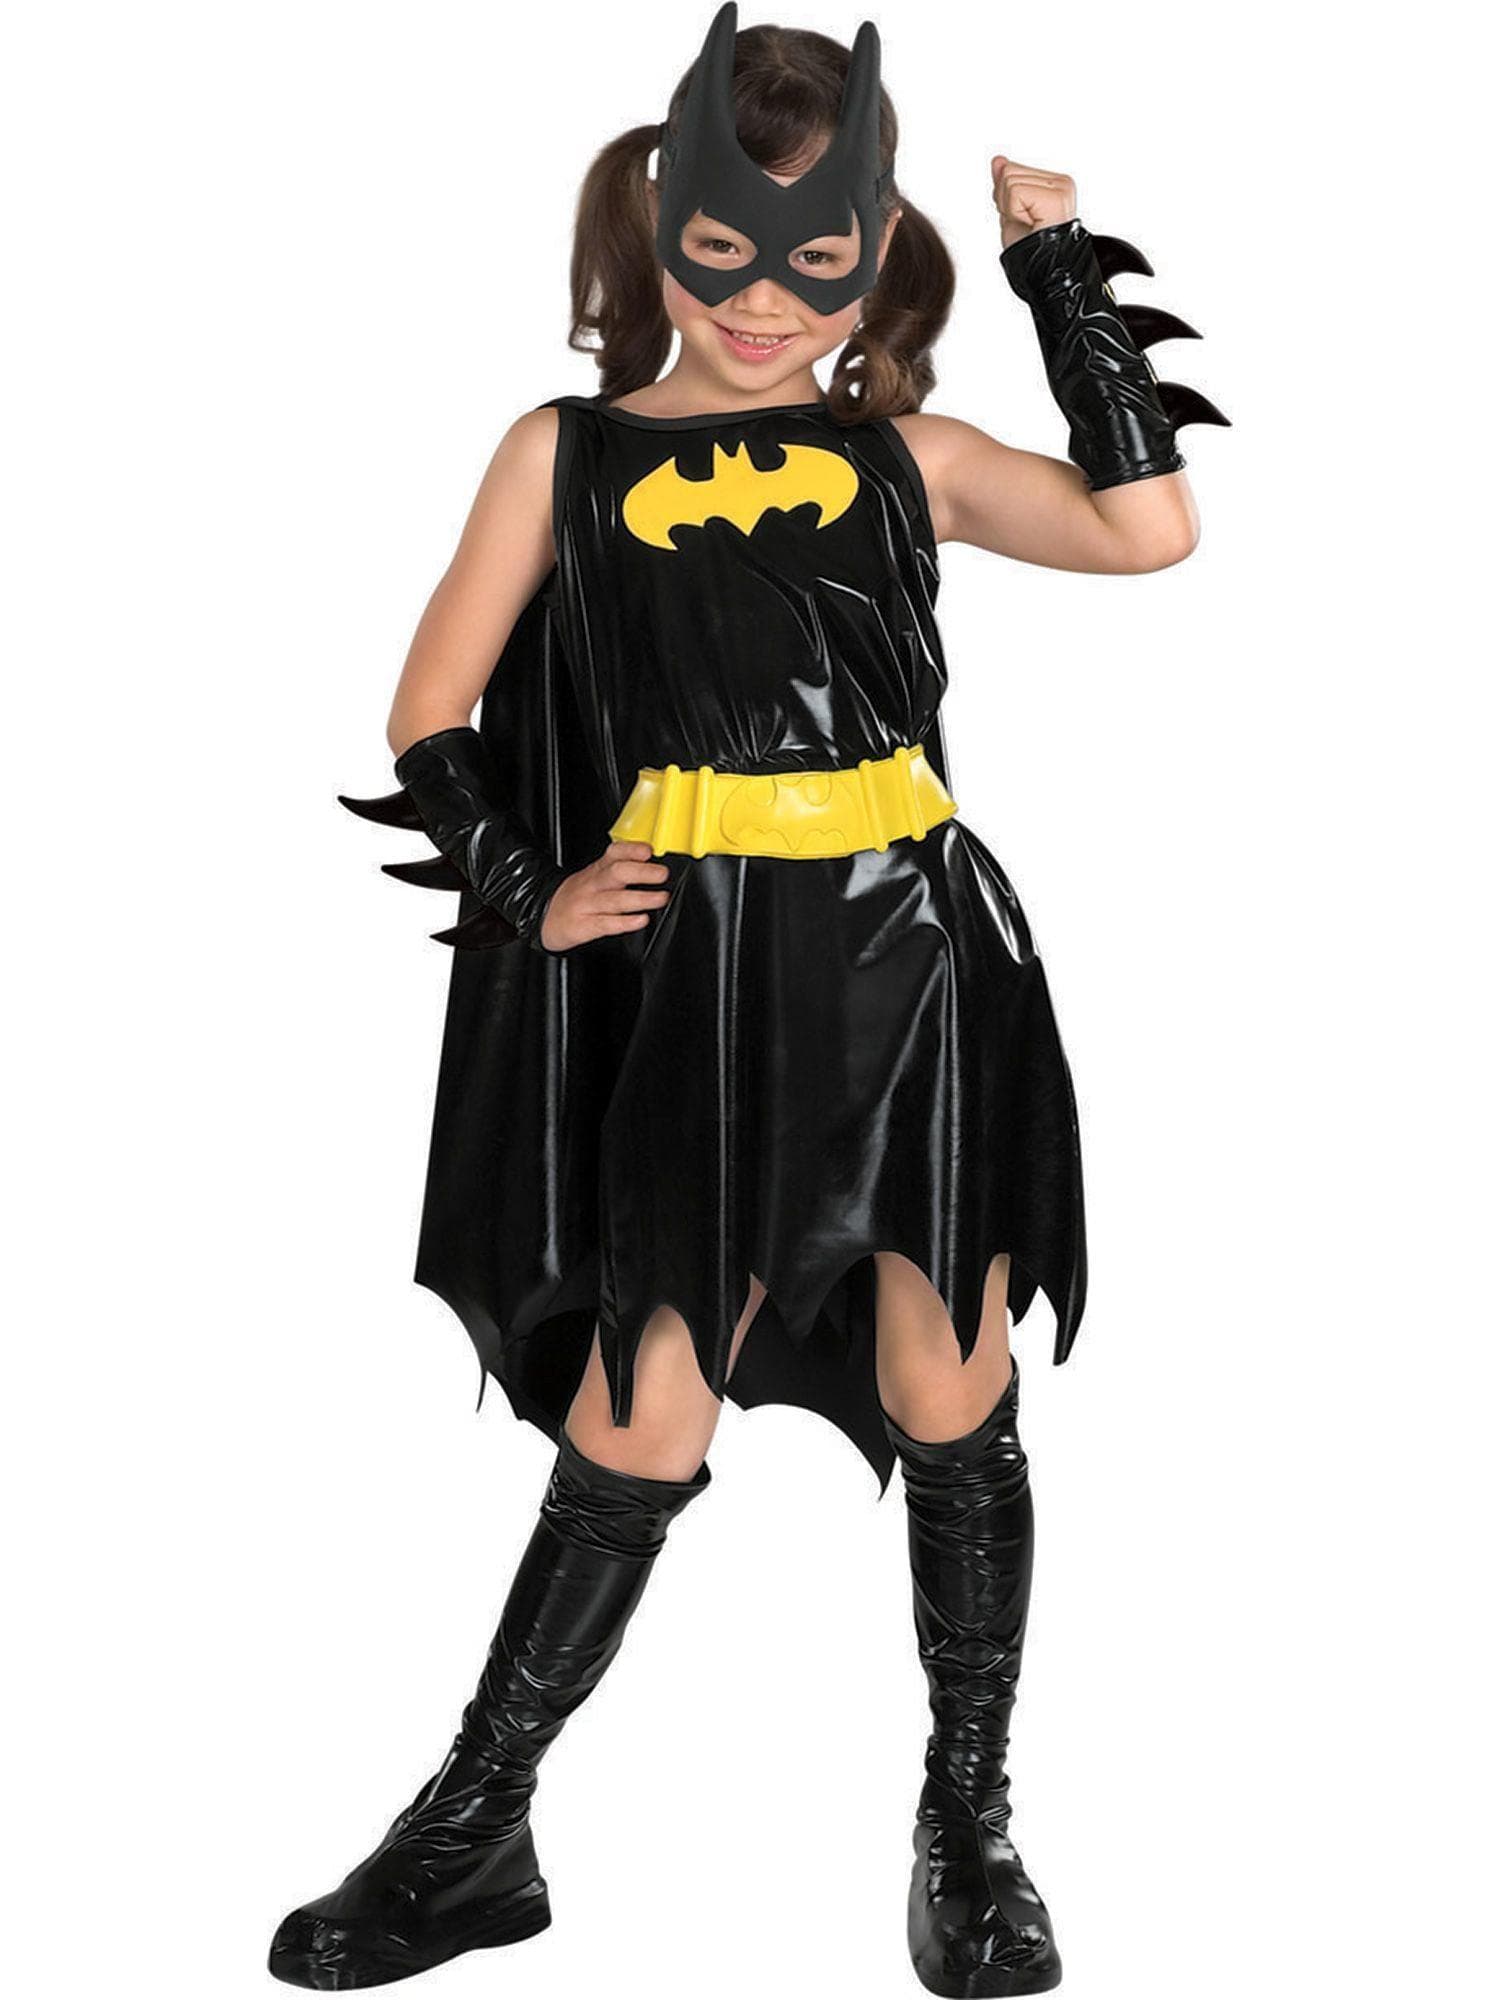 Kids DC Comics Batgirl Deluxe Costume - costumes.com